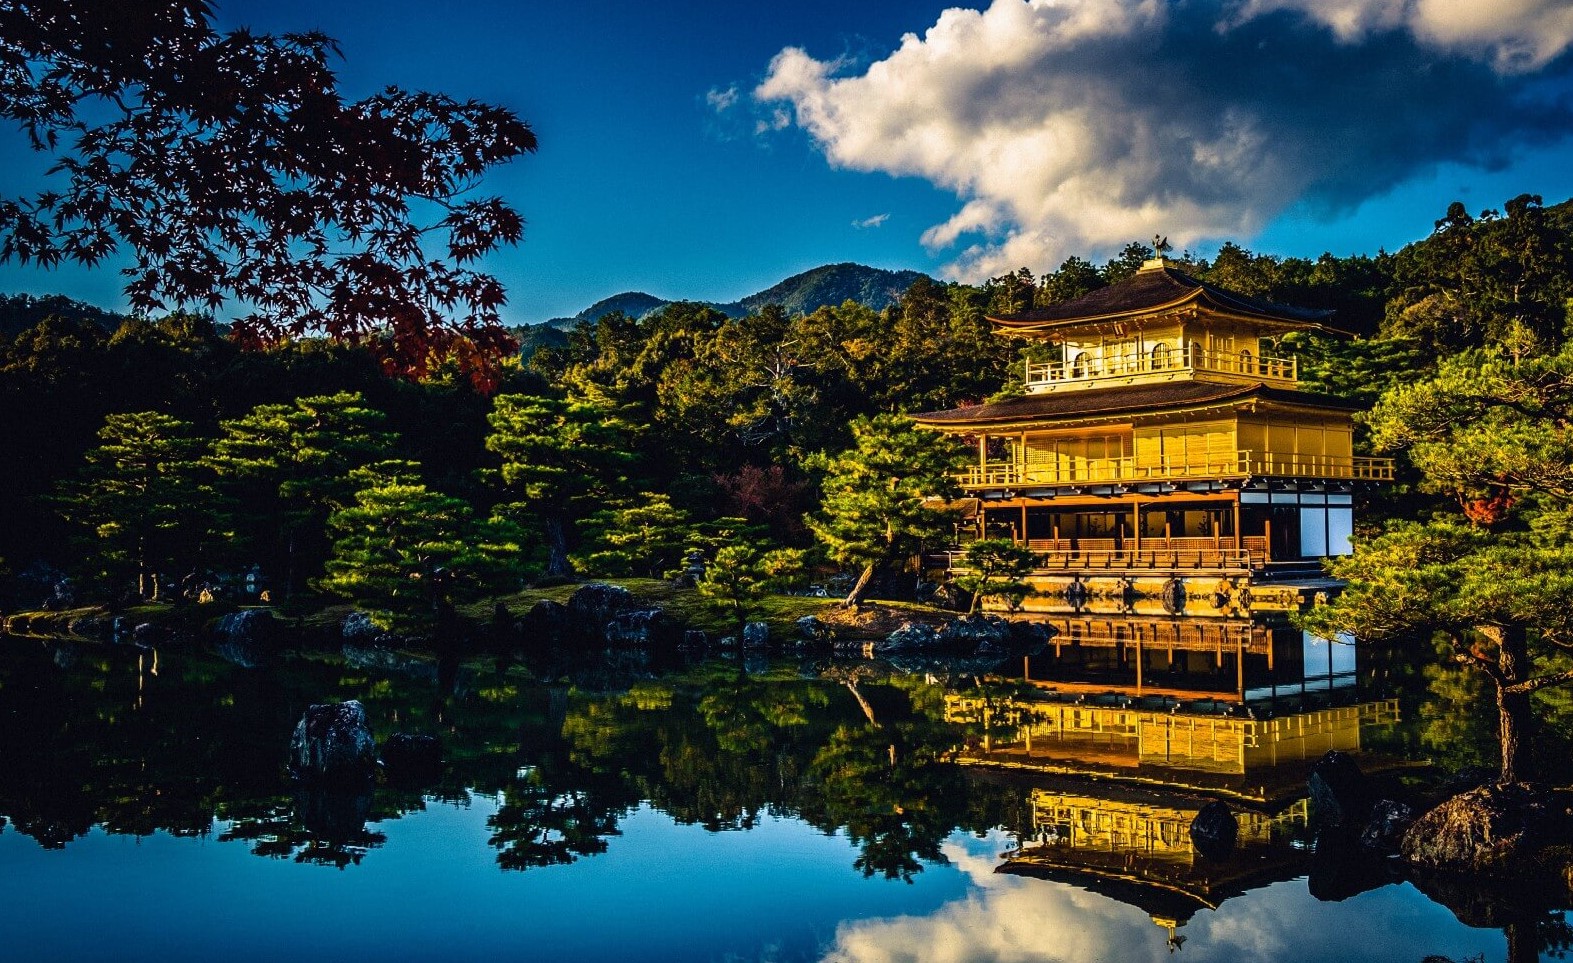 Kinkakuji Temple a.k.a. the Golden Pavilion